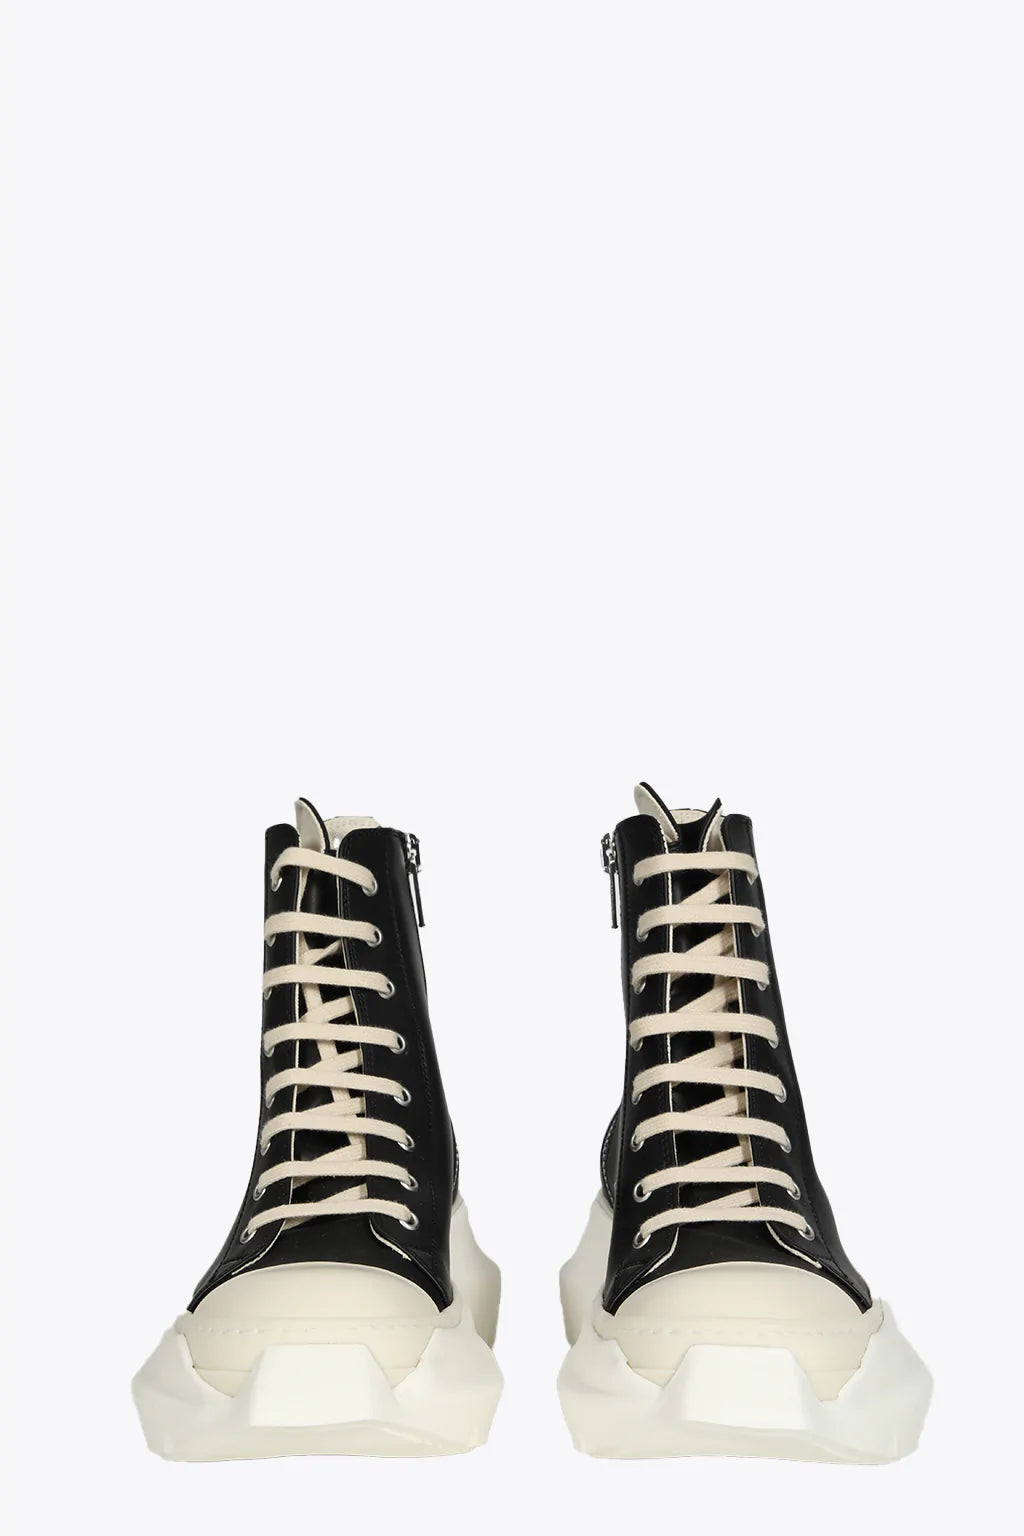 Rick Owens DRKSHDW High Top Abstract Sneakers – Acroera